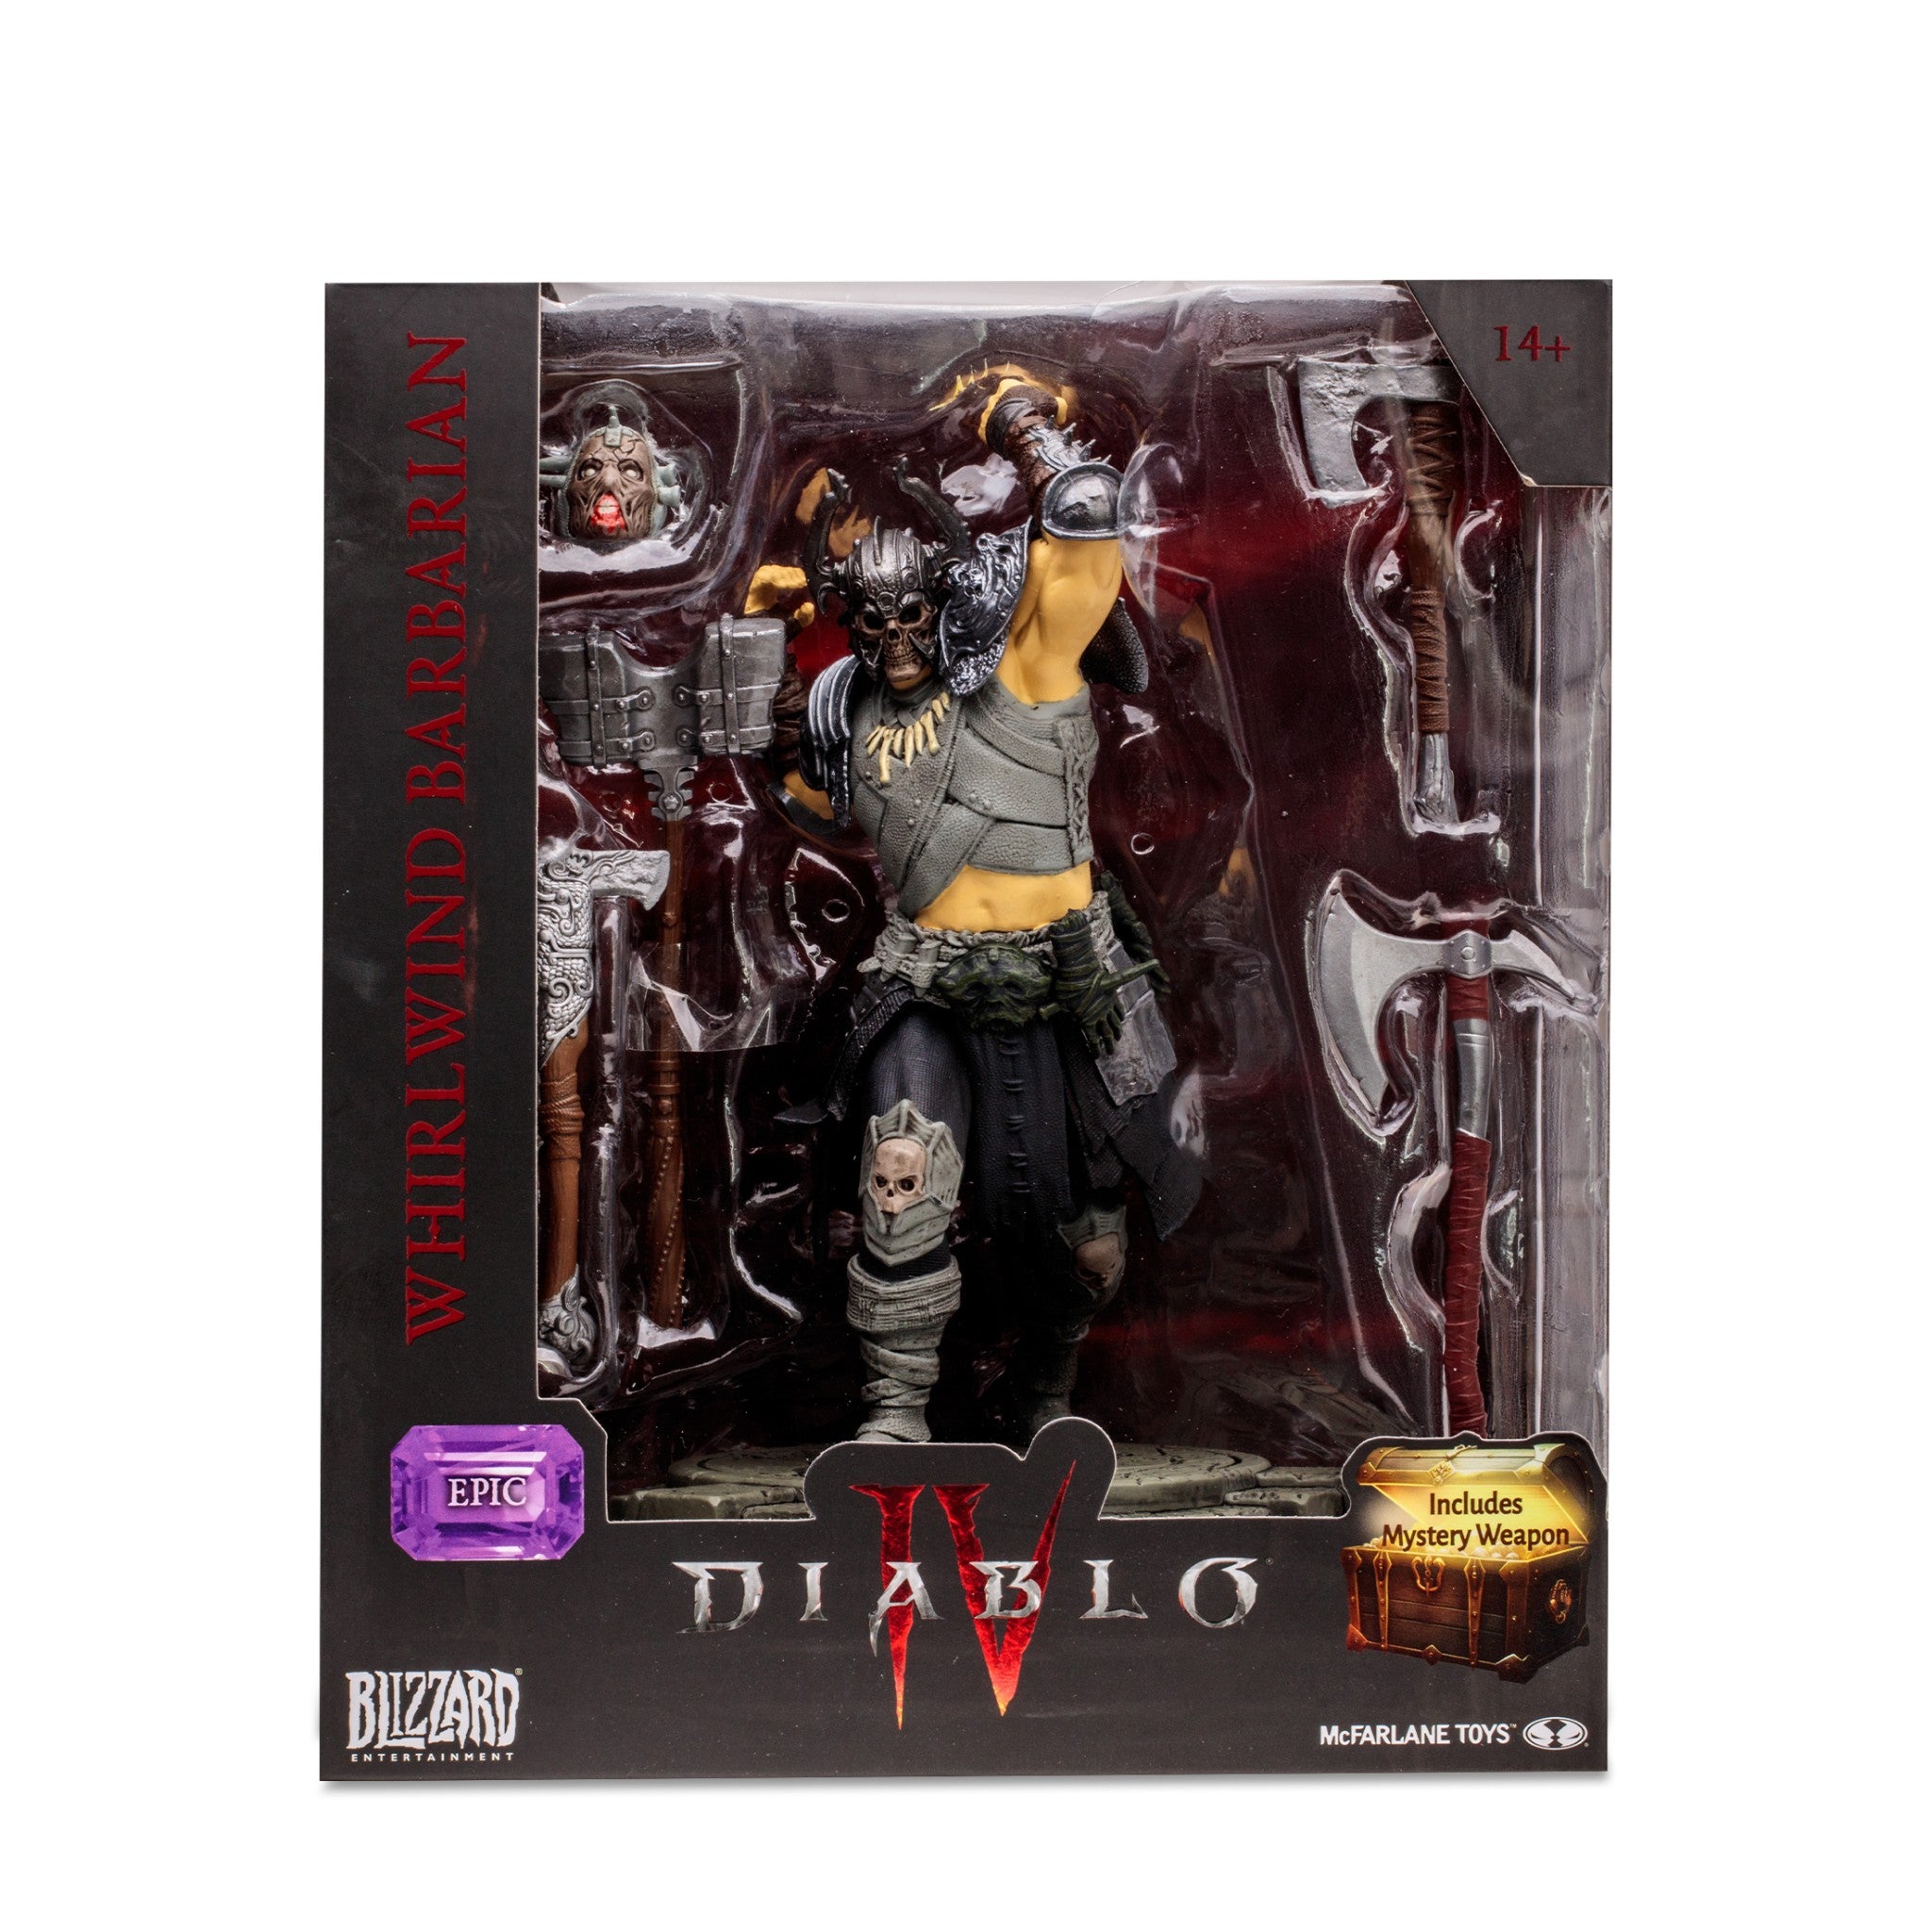 Diablo IV Whirlwind Barbarian 7" Epic Figure - McFarlane Toys - 0